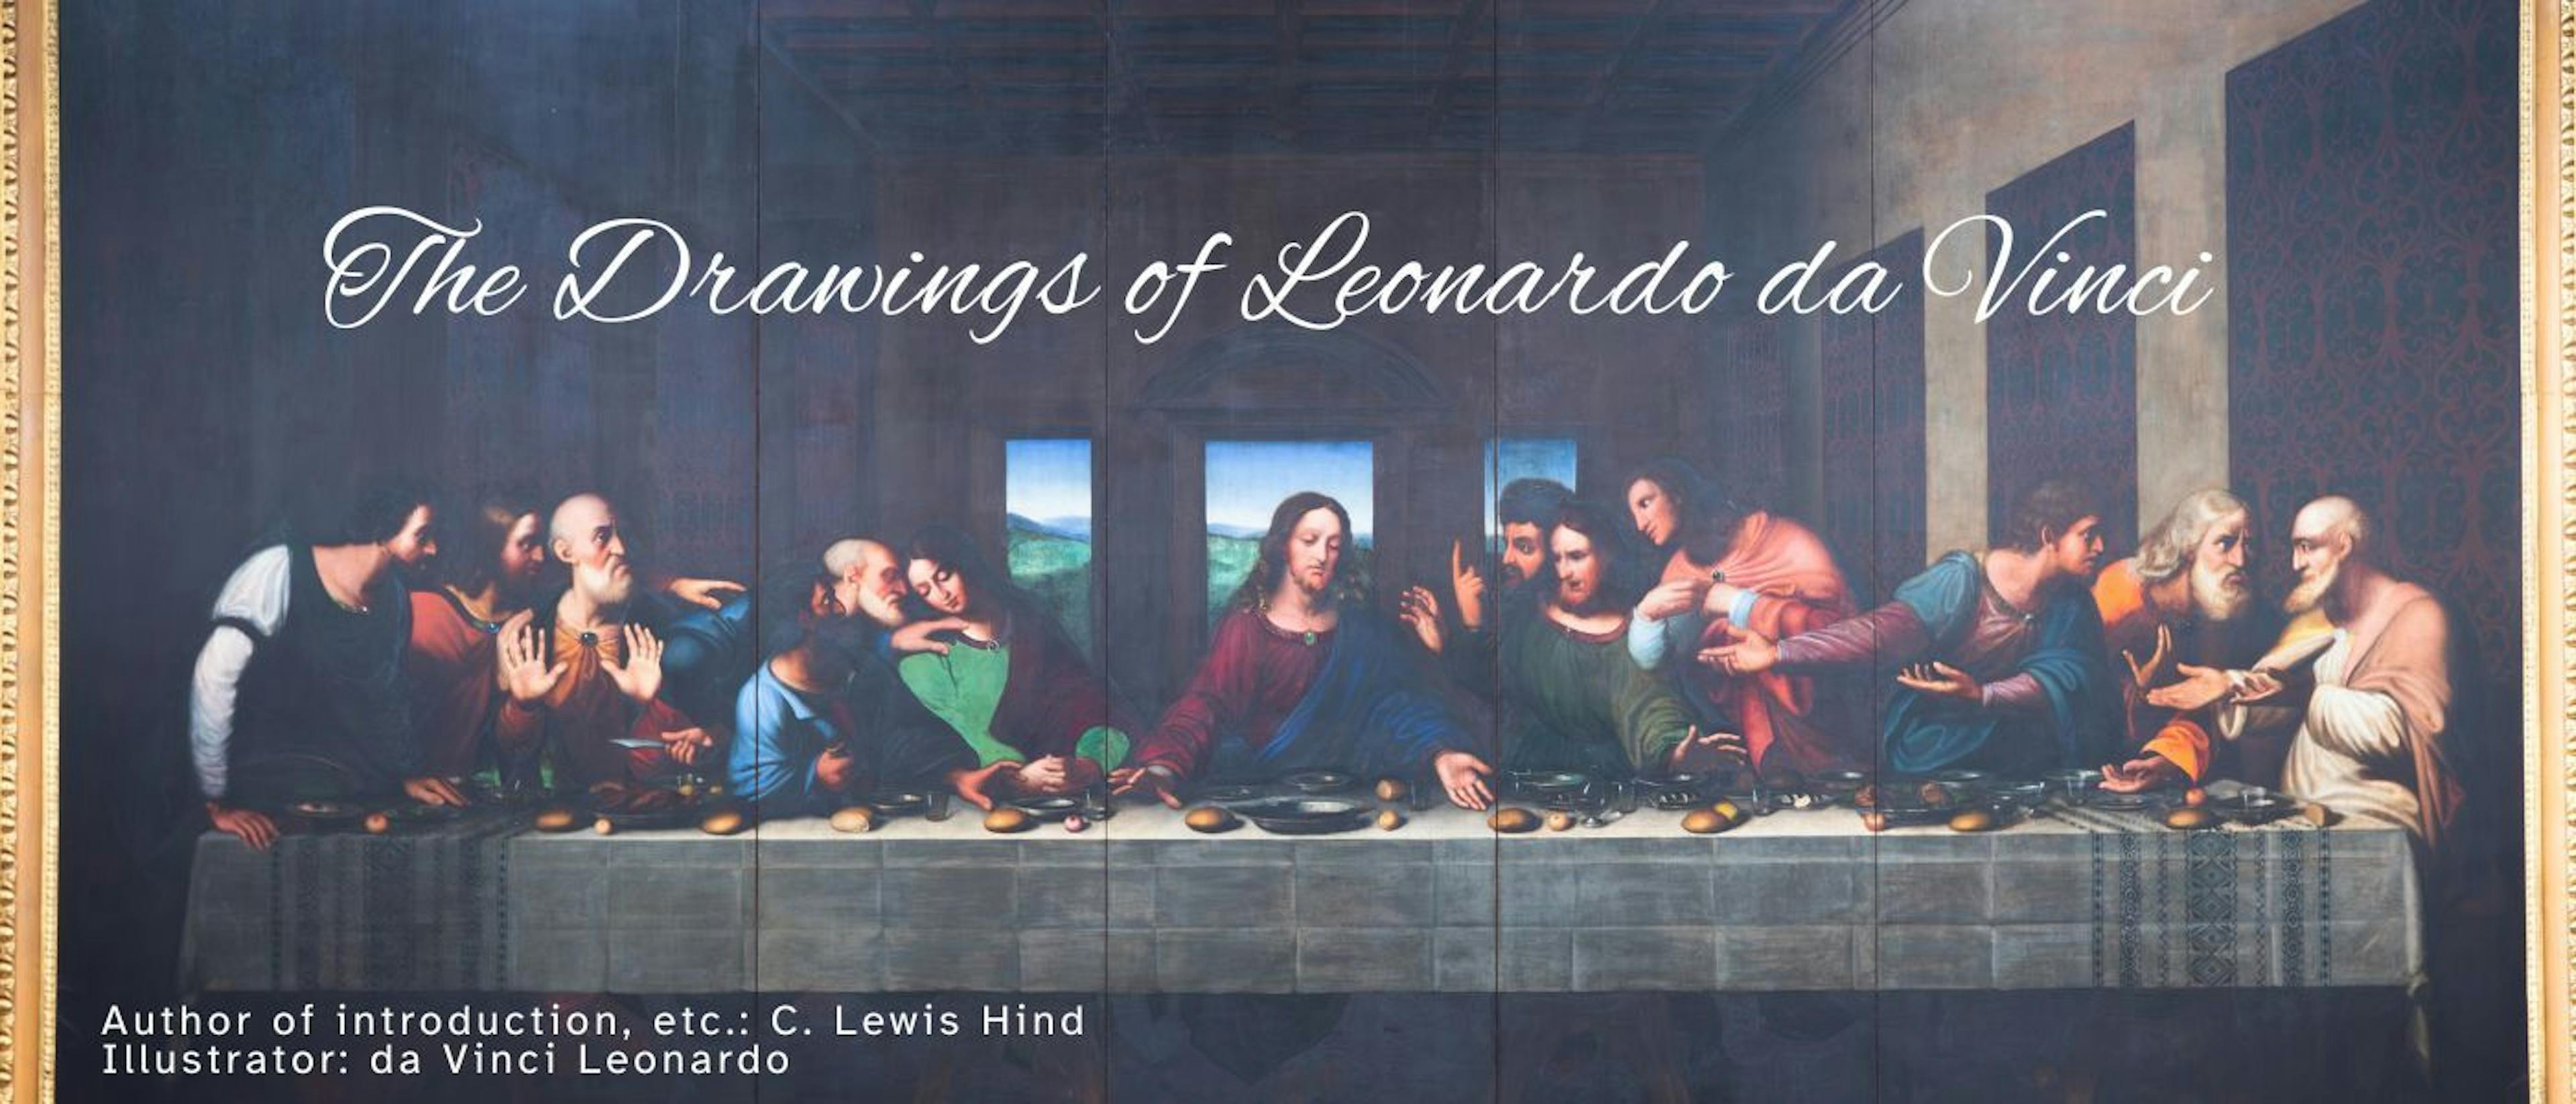 featured image - The Illustrations of Leonardo Da Vinci's drawing